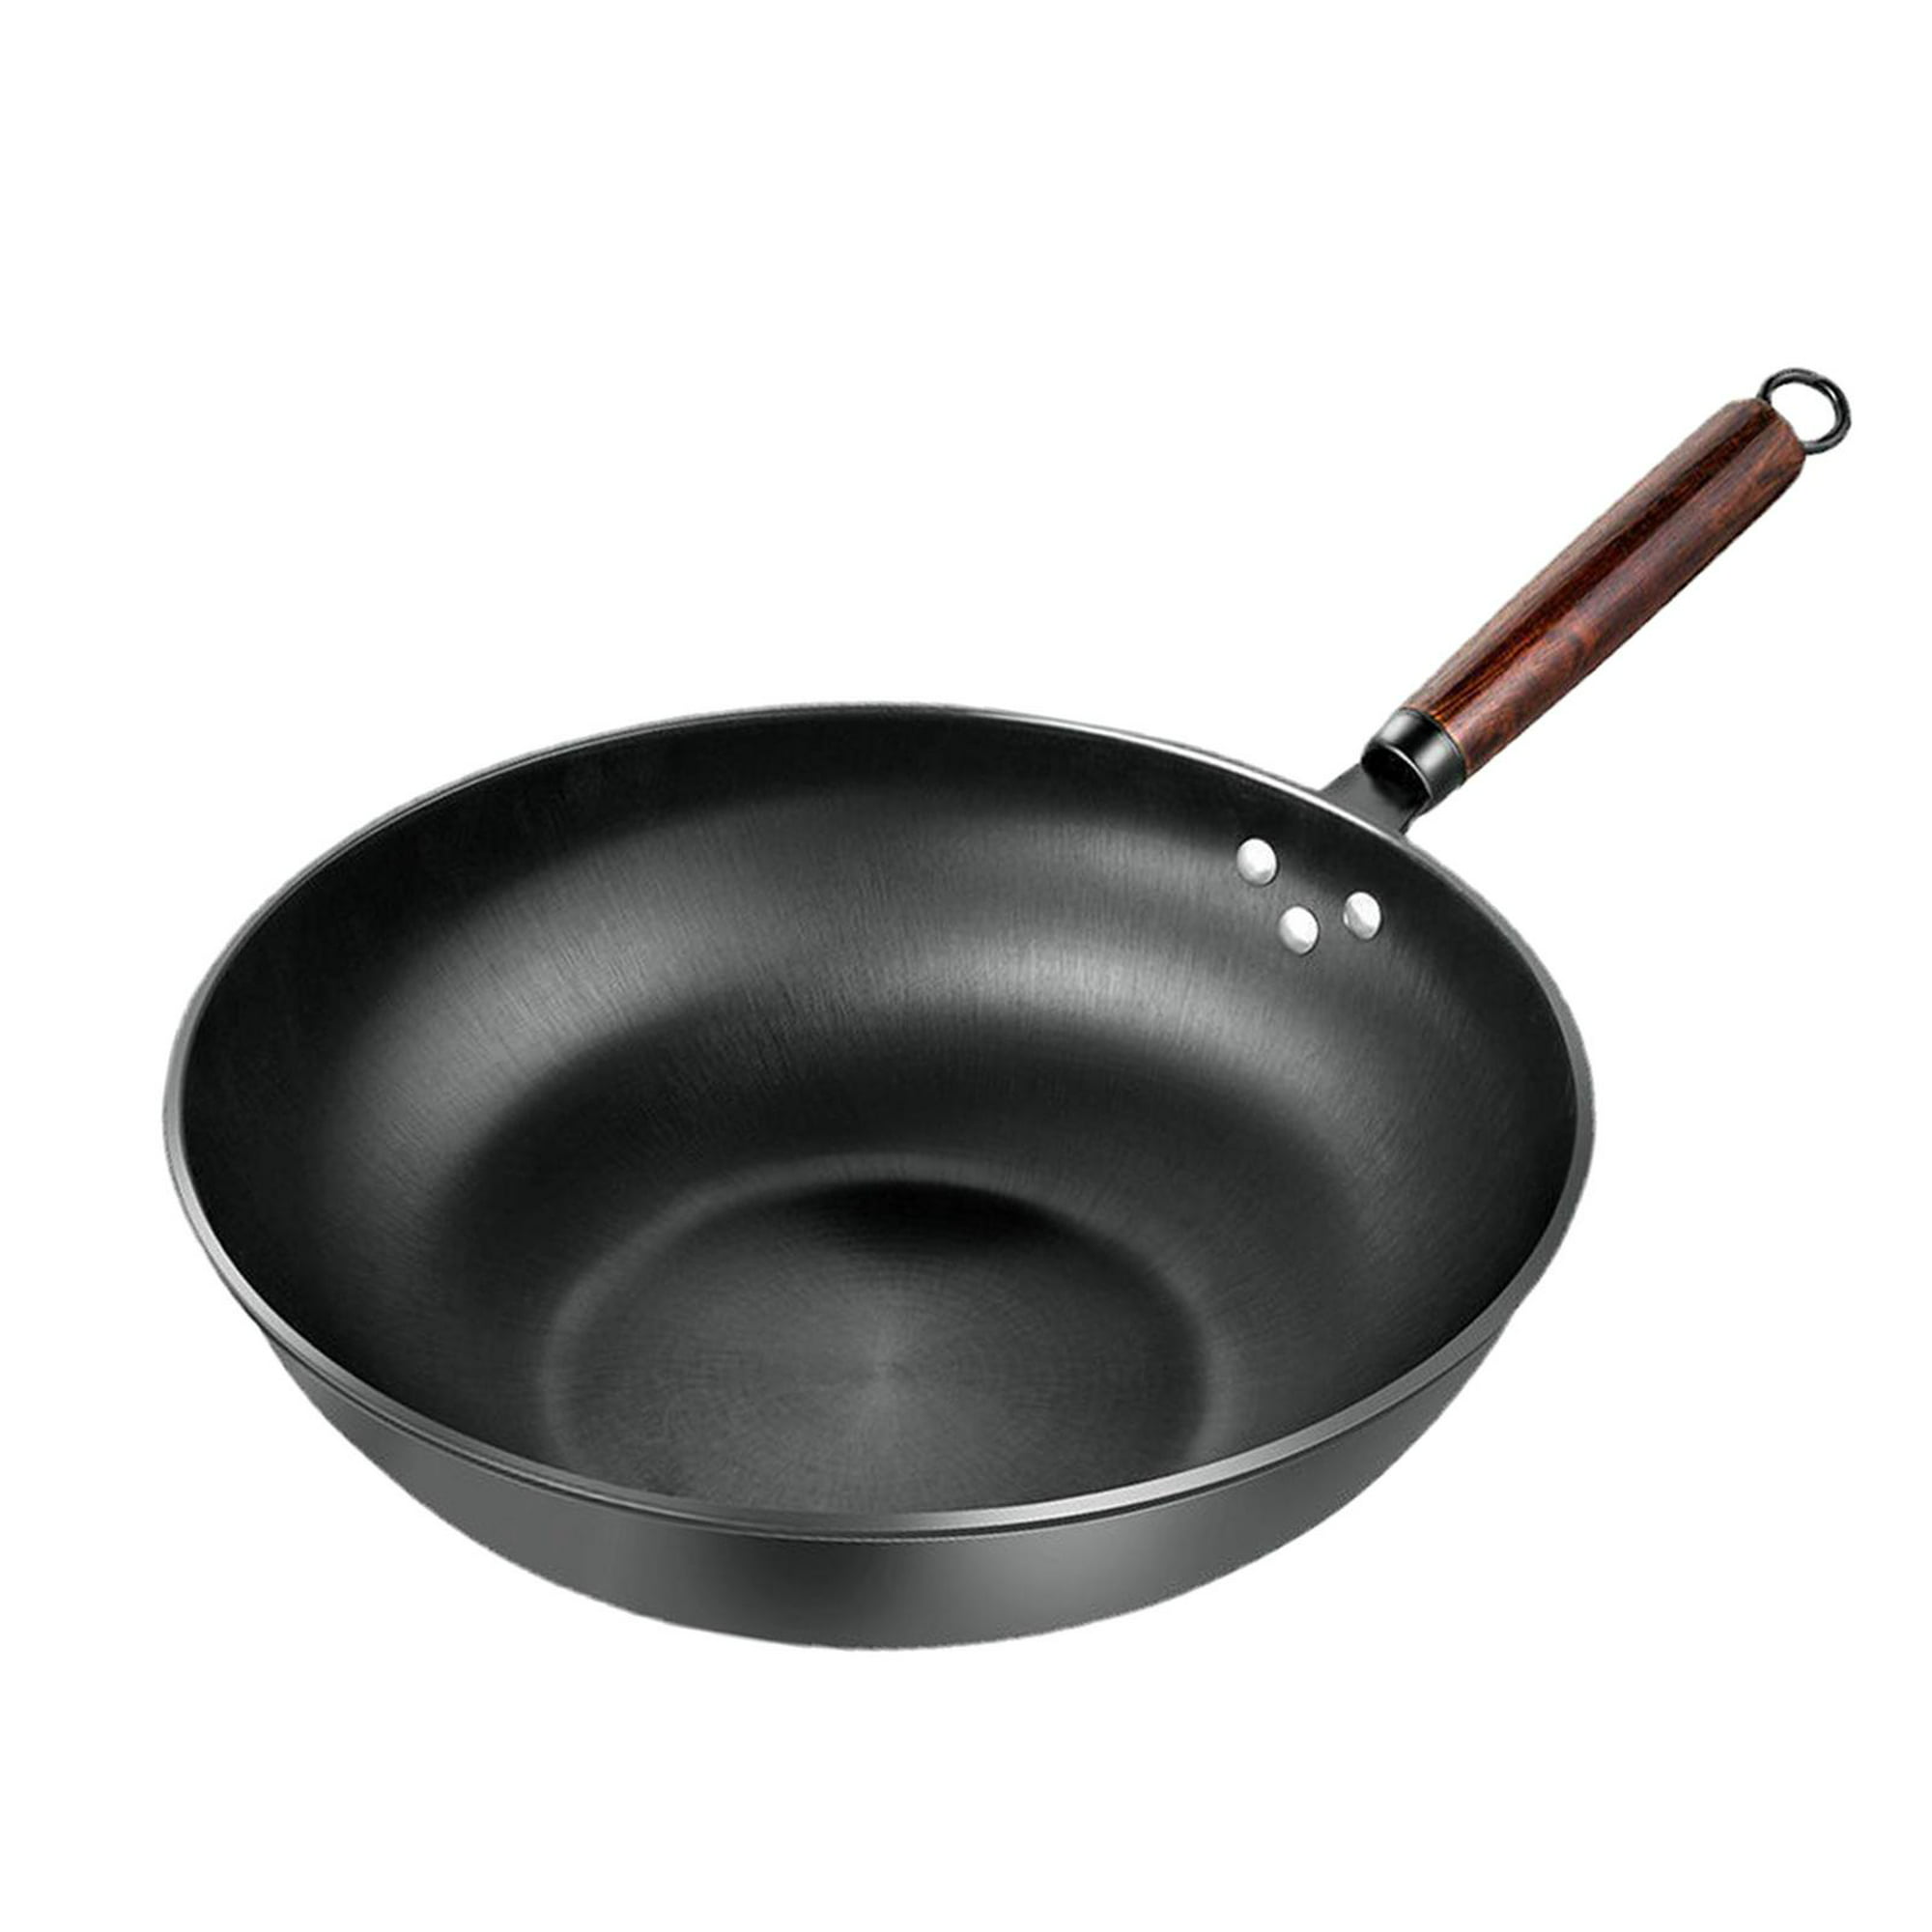 Sartén wok antiadherente, sartén de mango largo, utensilios de cocina con  tapa, sartén para tortillas, sartén para saltear sin recubrimiento para 34  cm redondo Soledad sartén wok